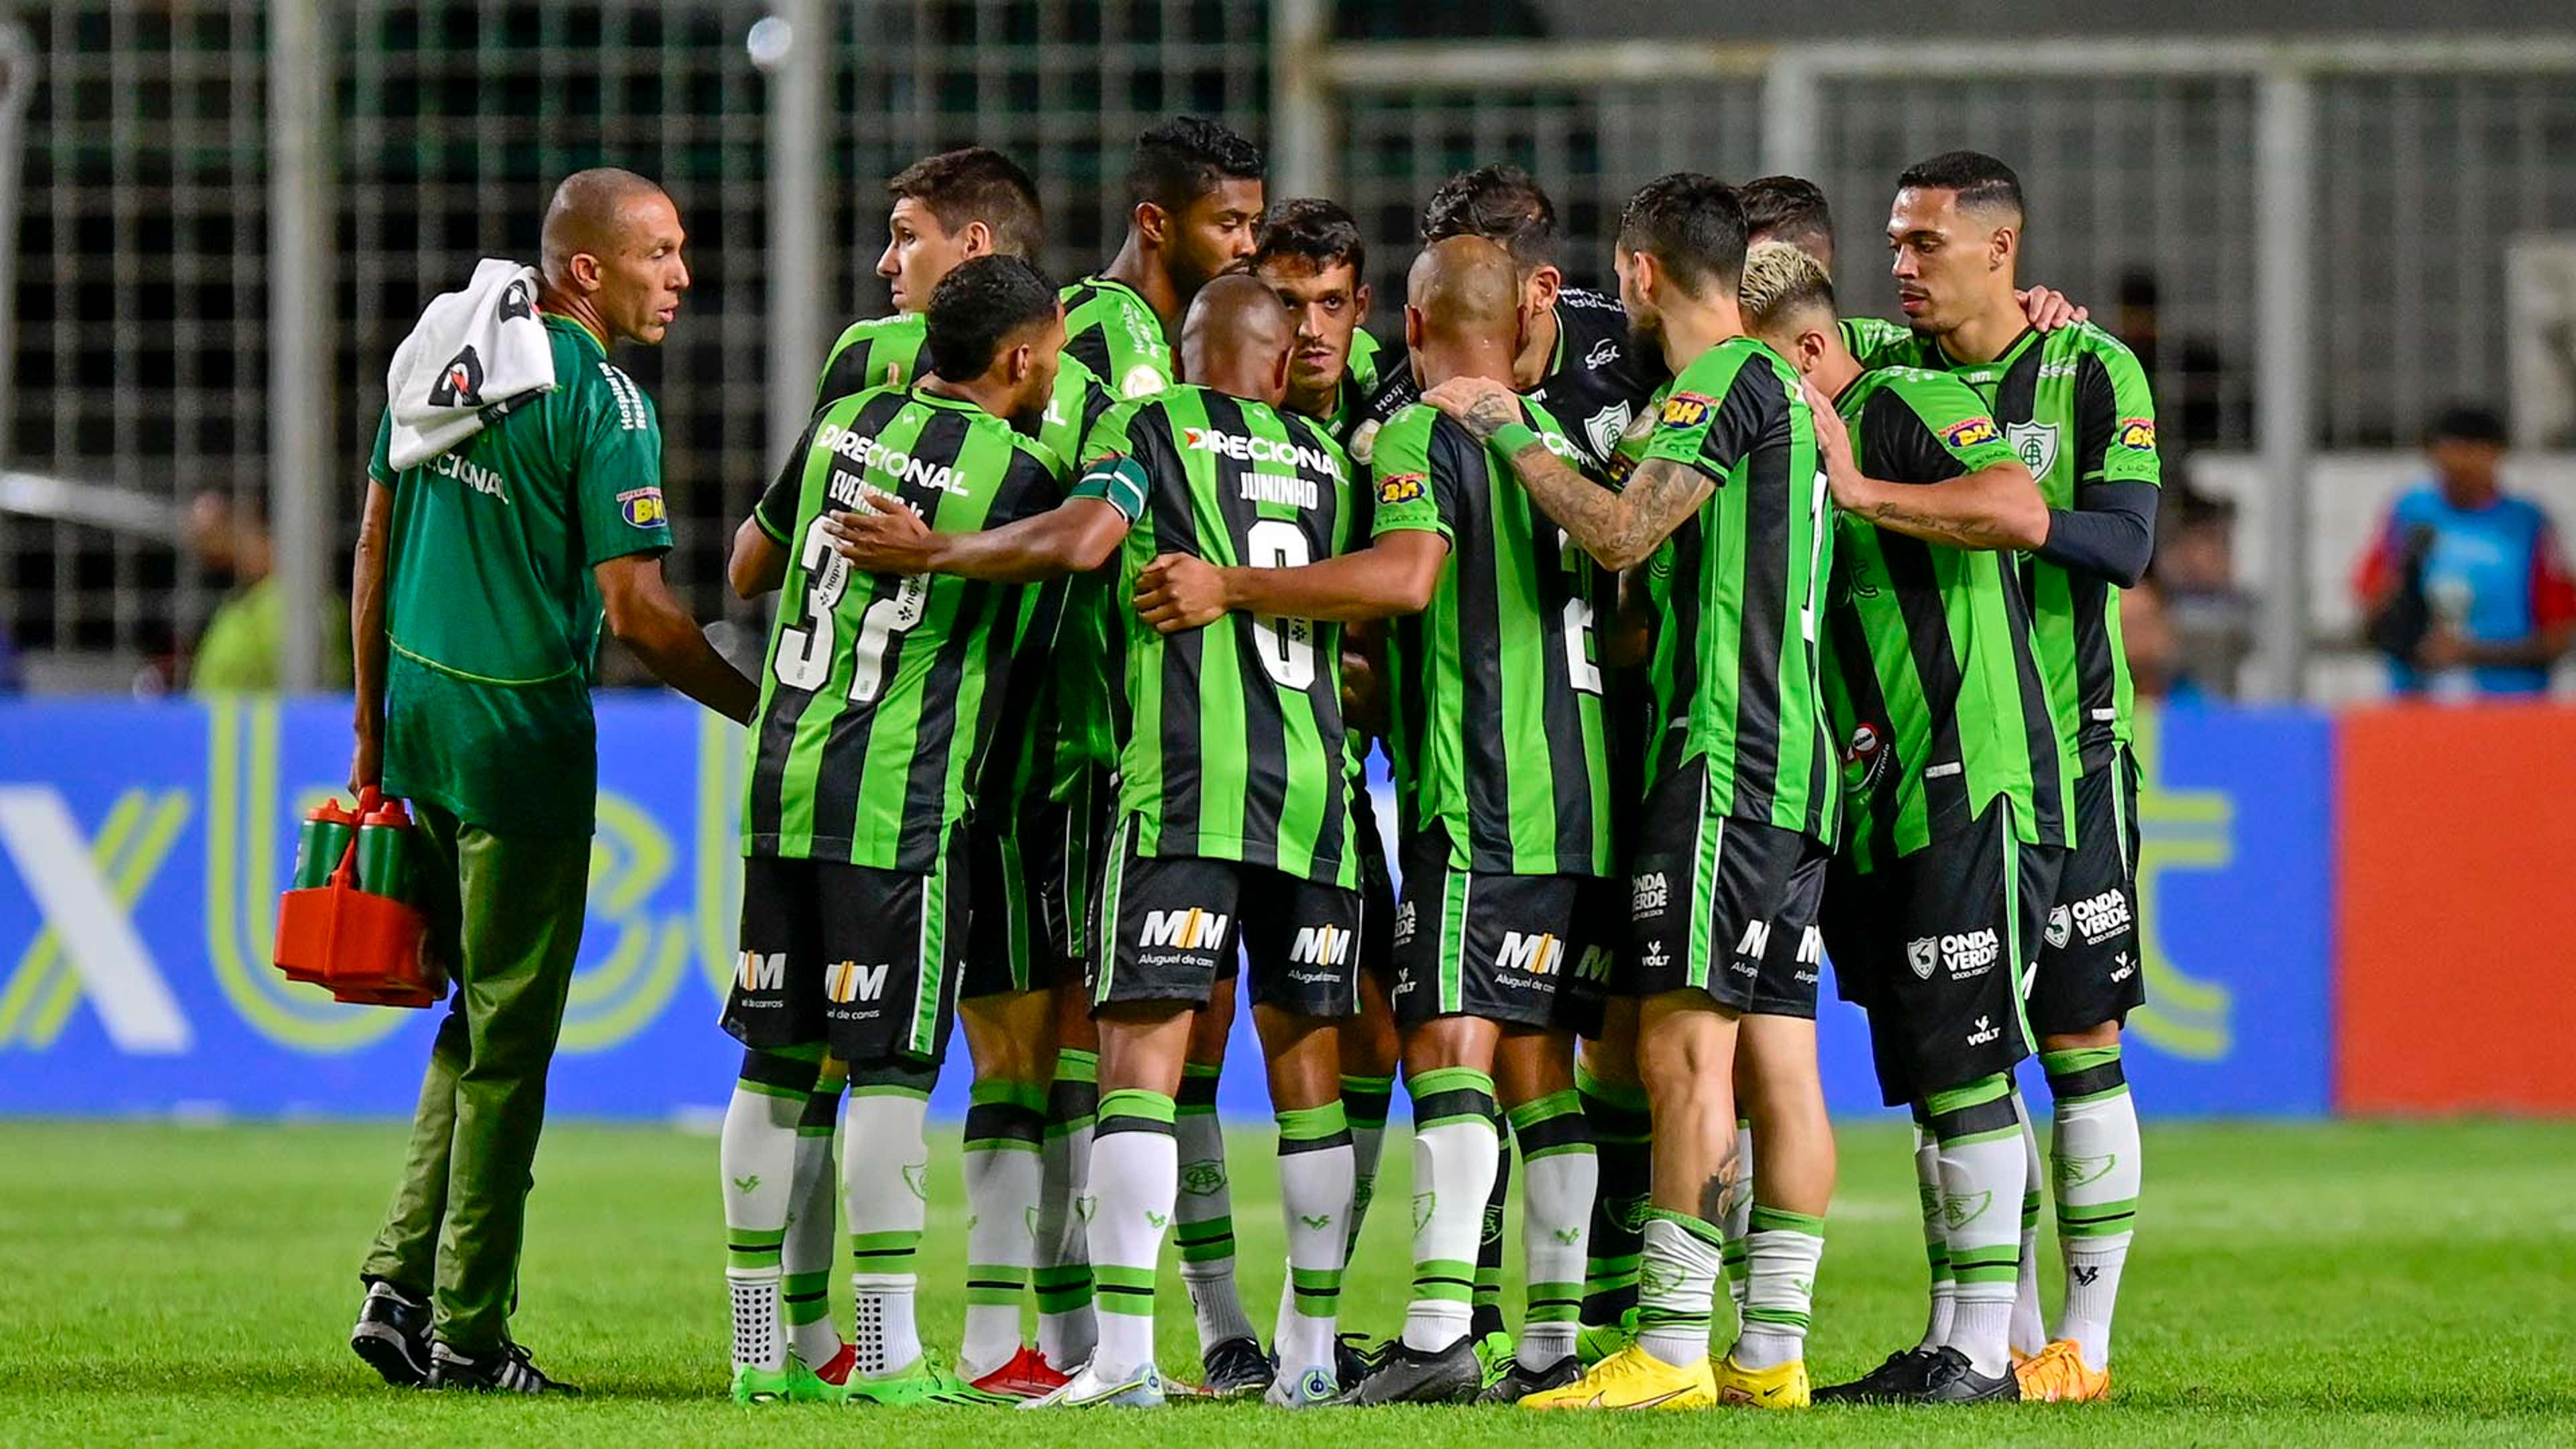 Tombense vs Atlético-GO: An Exciting Clash of Brazilian Football Giants